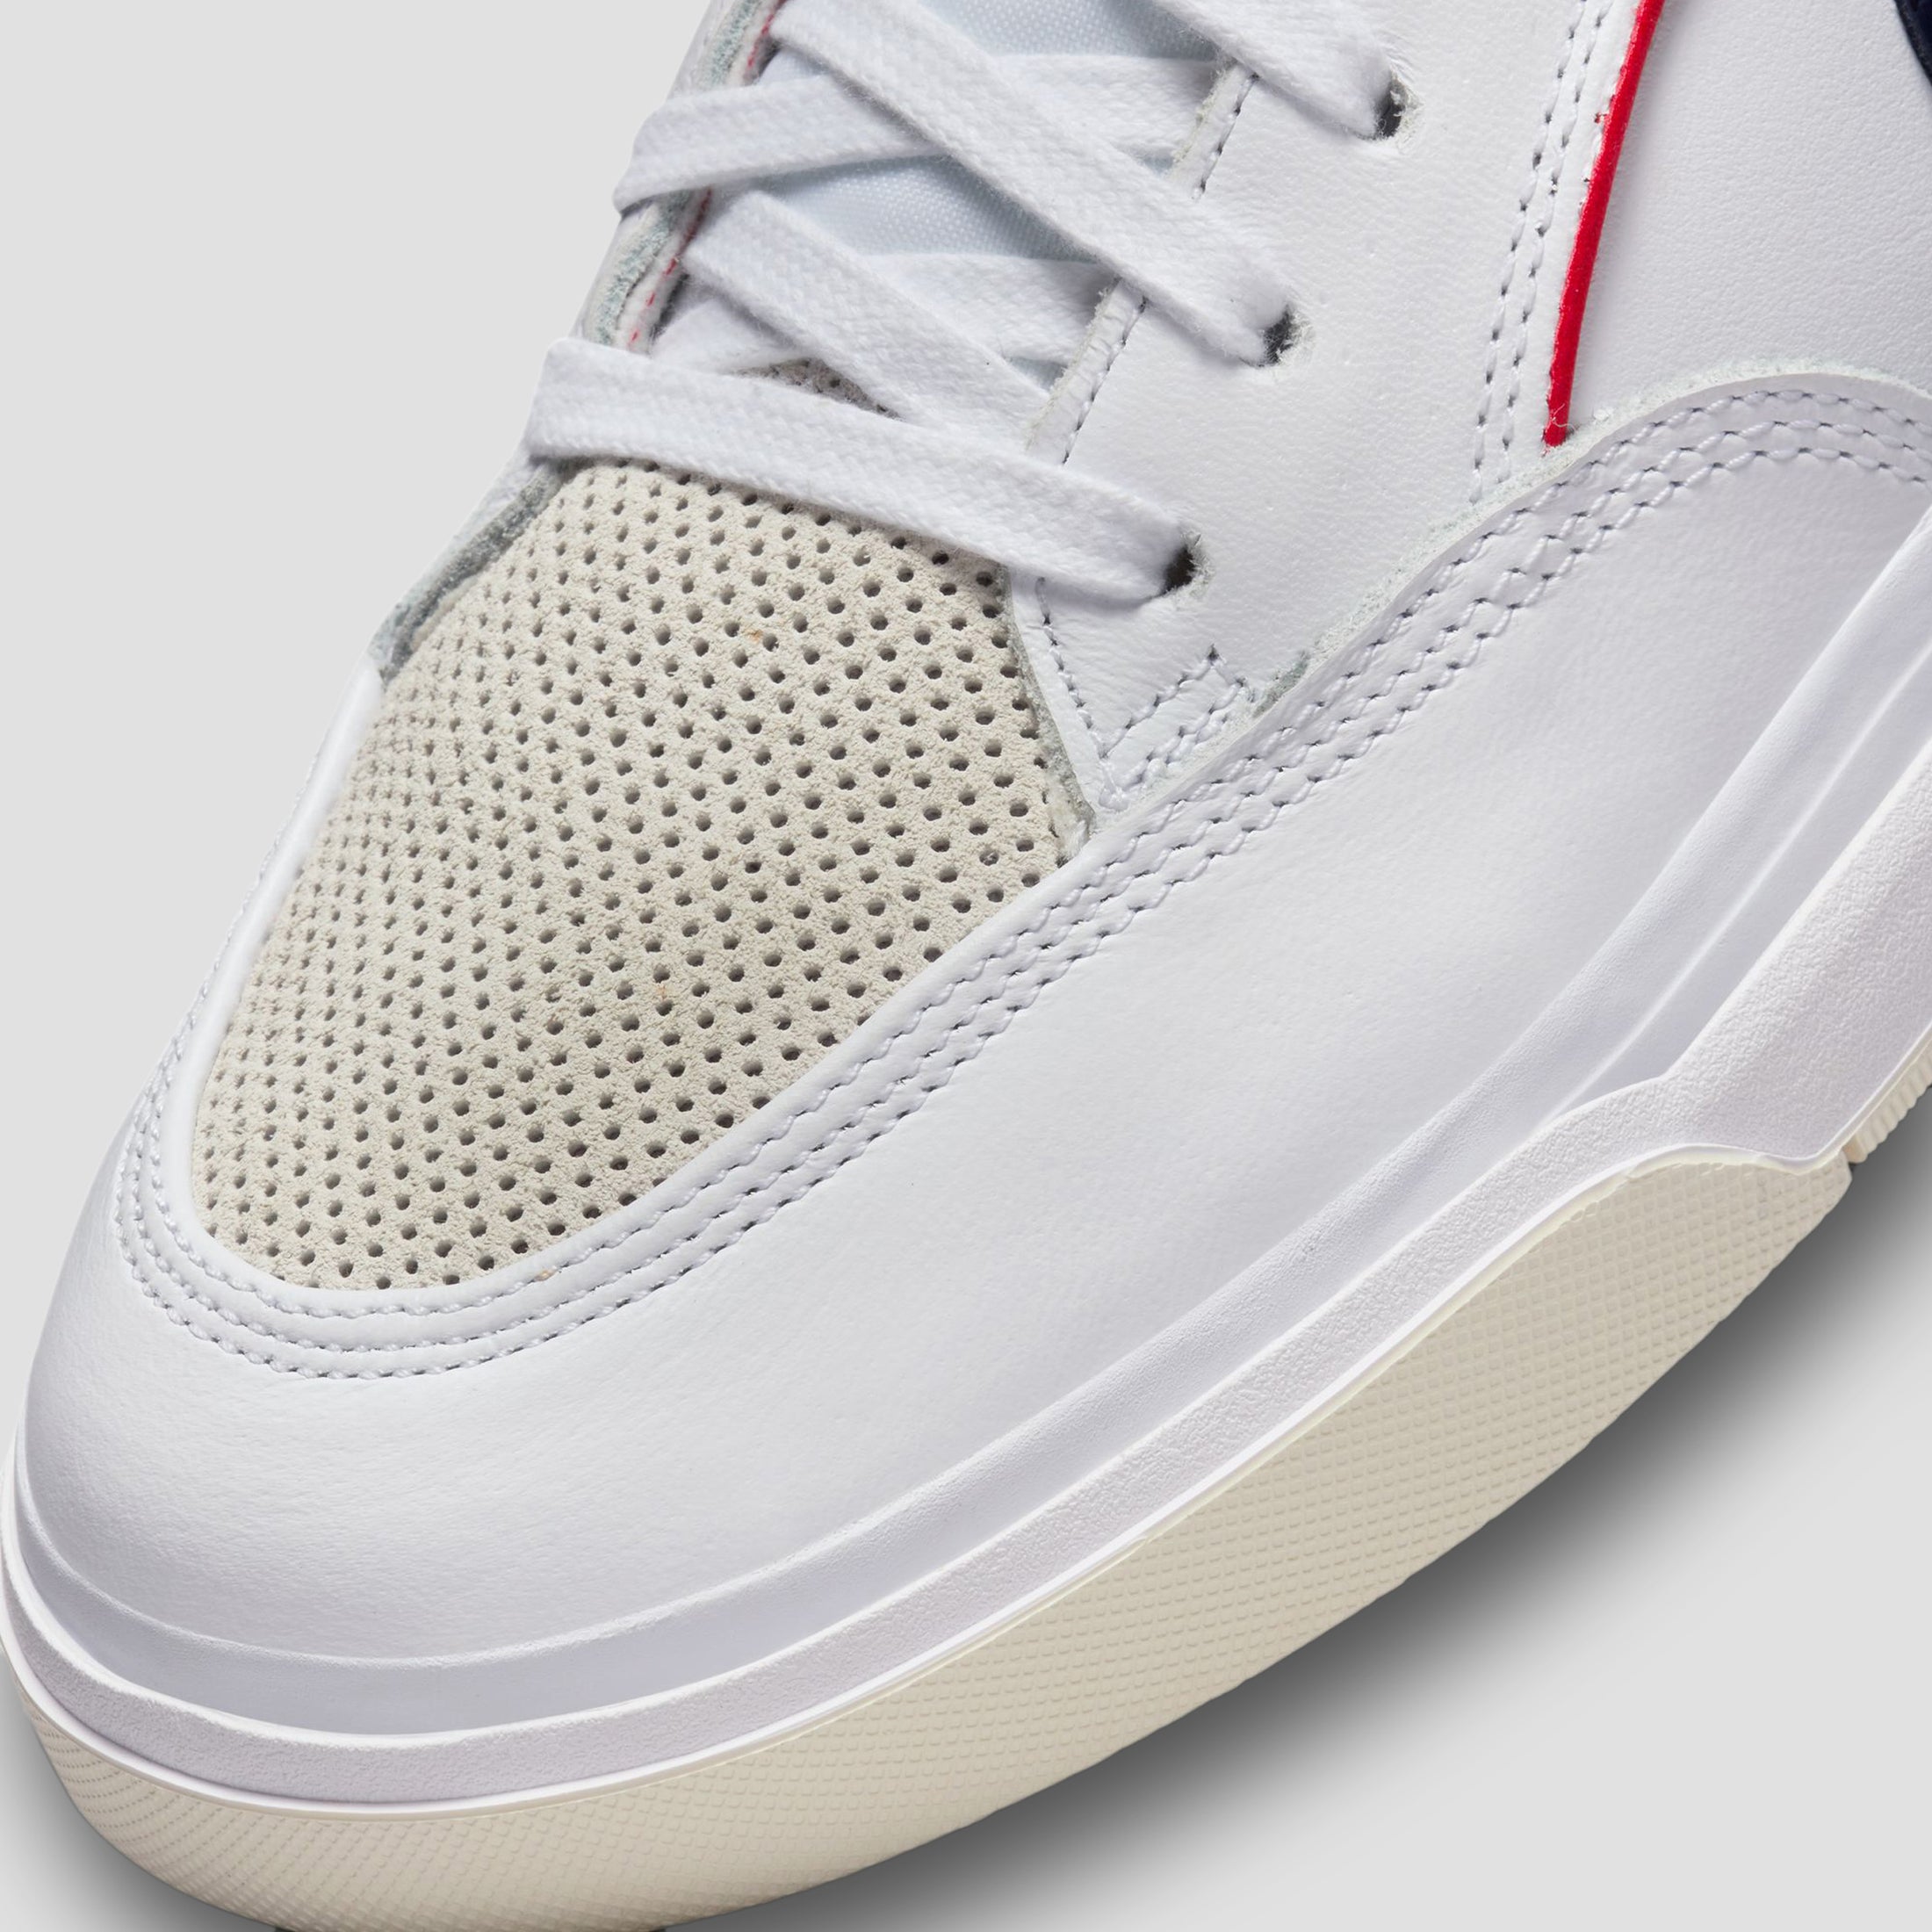 Nike SB React Leo Premium Skate Shoes White / Midnight Navy / University Red / White